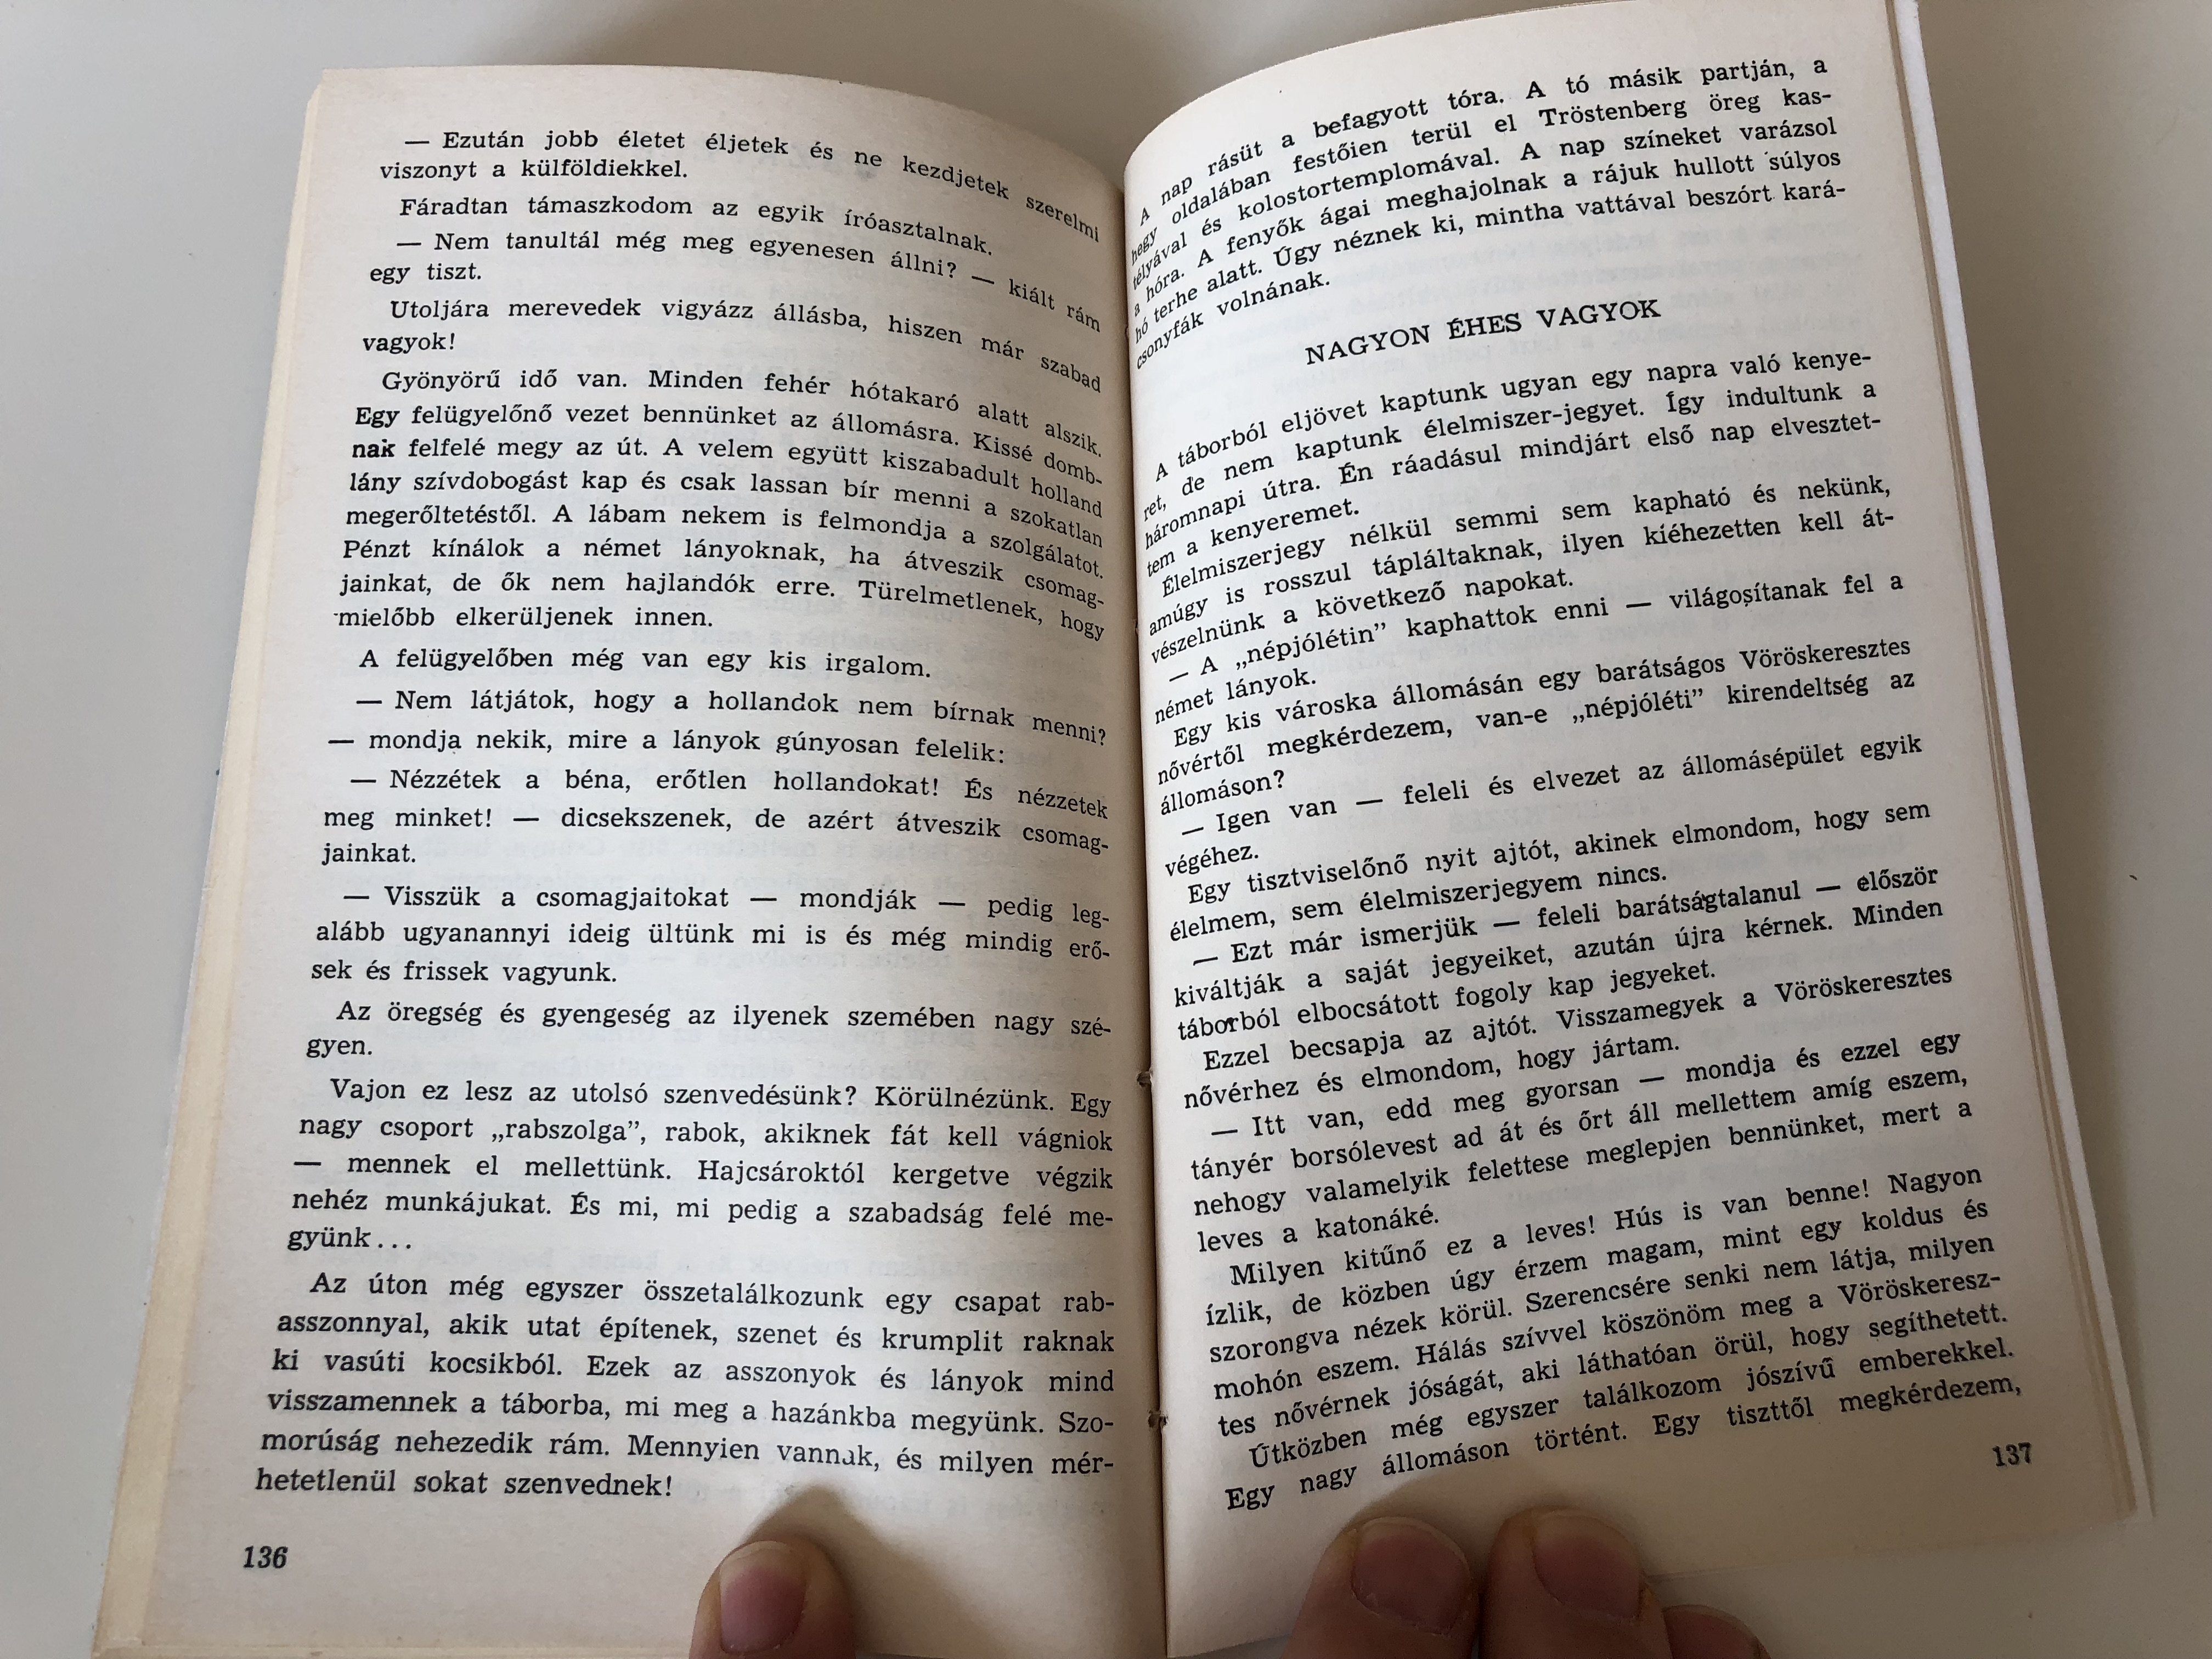 m-gis-corrie-ten-boom-hungarian-translation-of-a-prisoner-and-yet...-paperback-1967-magyarorsz-gi-szabadegyh-zak-tan-csa-7-.jpg